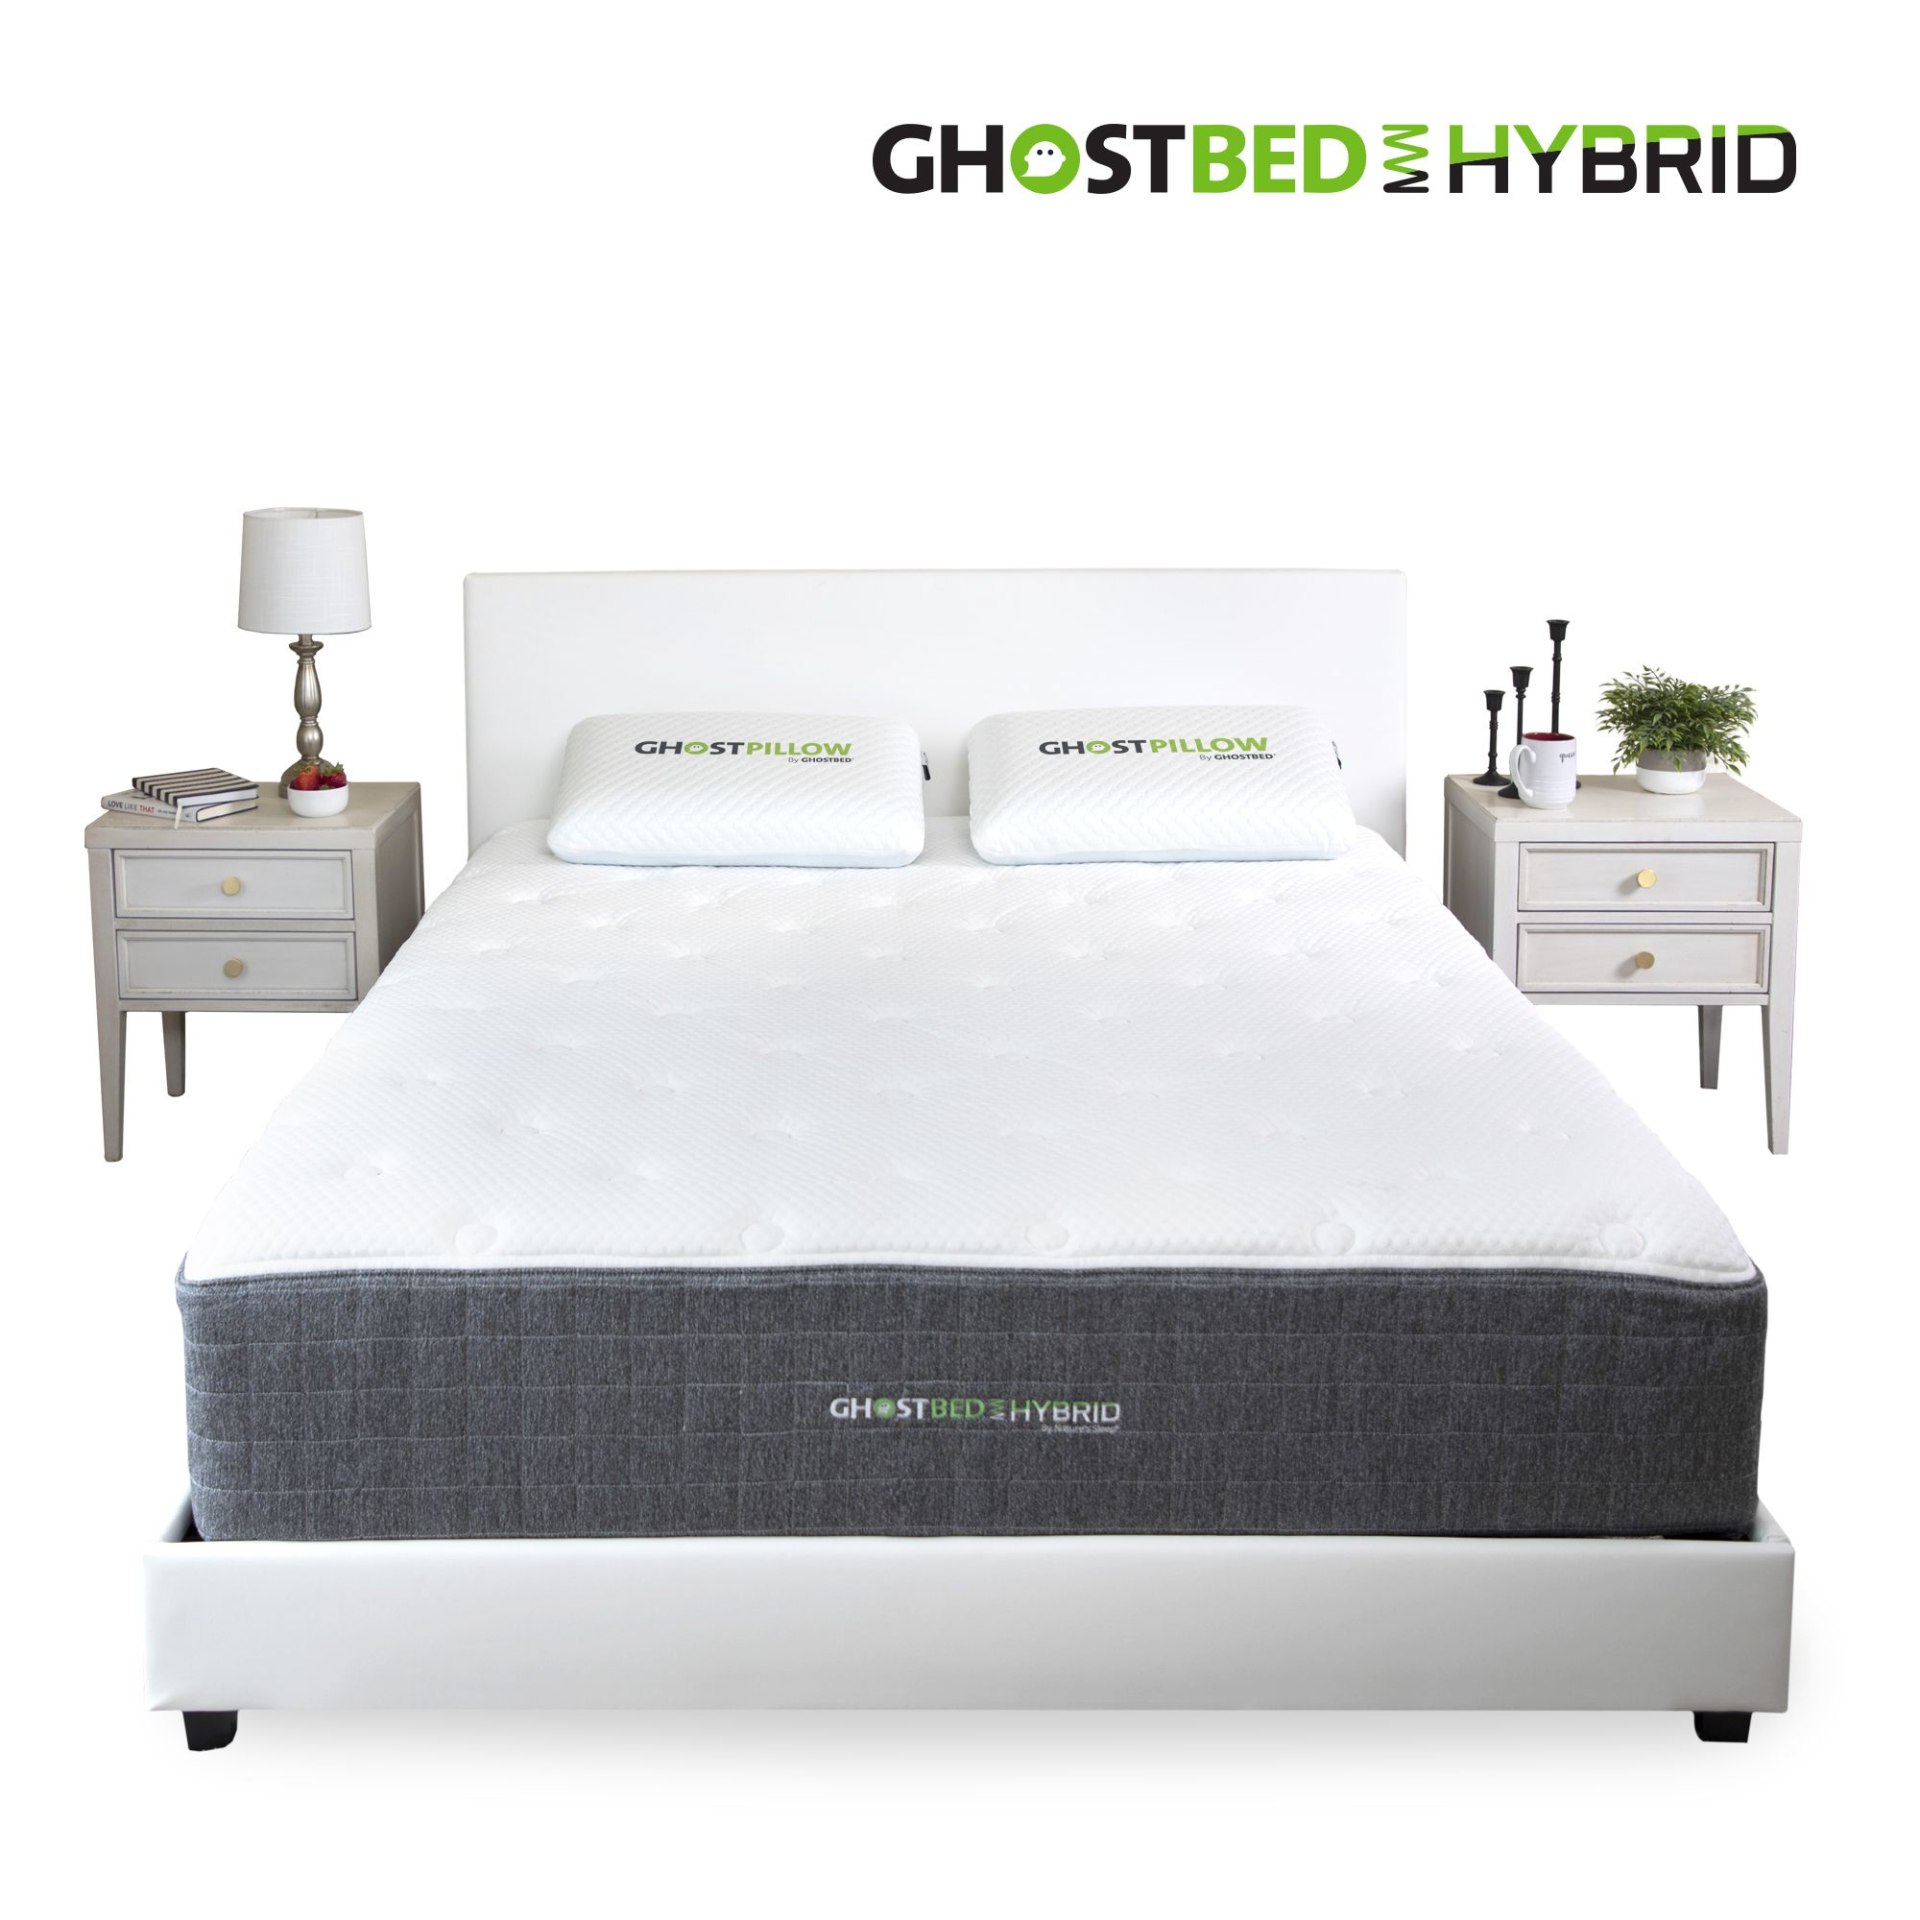 Ghostbed Hybrid 12" Medium | Costco